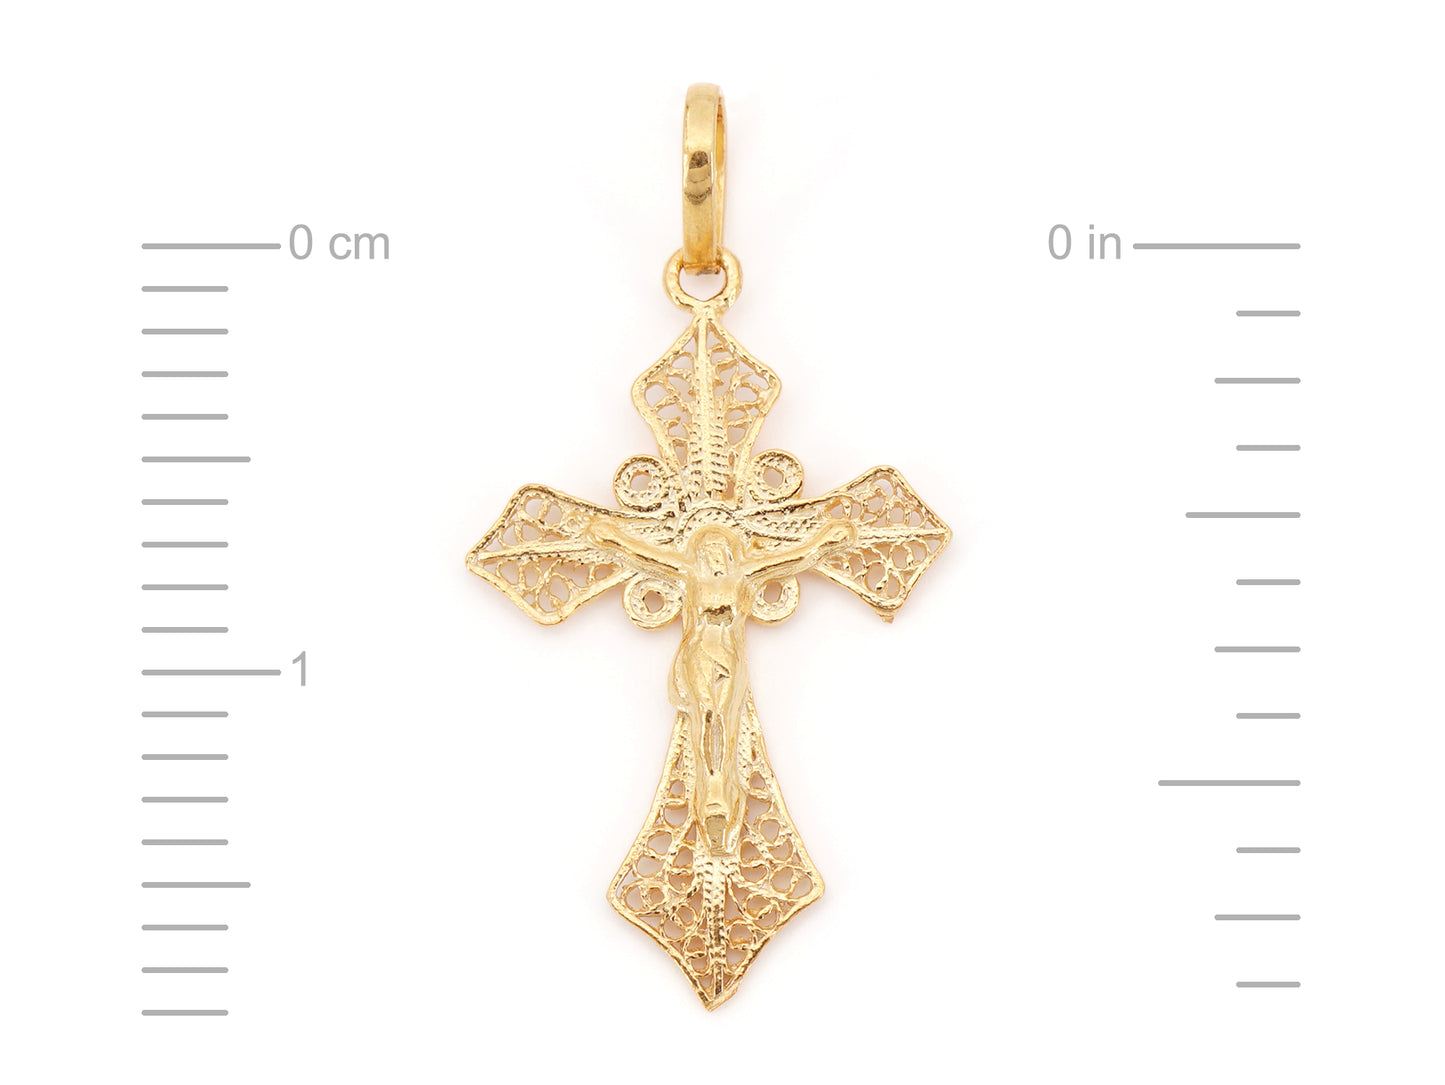 Colar Cruz Pequena, Filigrana Portuguesa, Prata de Lei 925 Dourada - Medidas